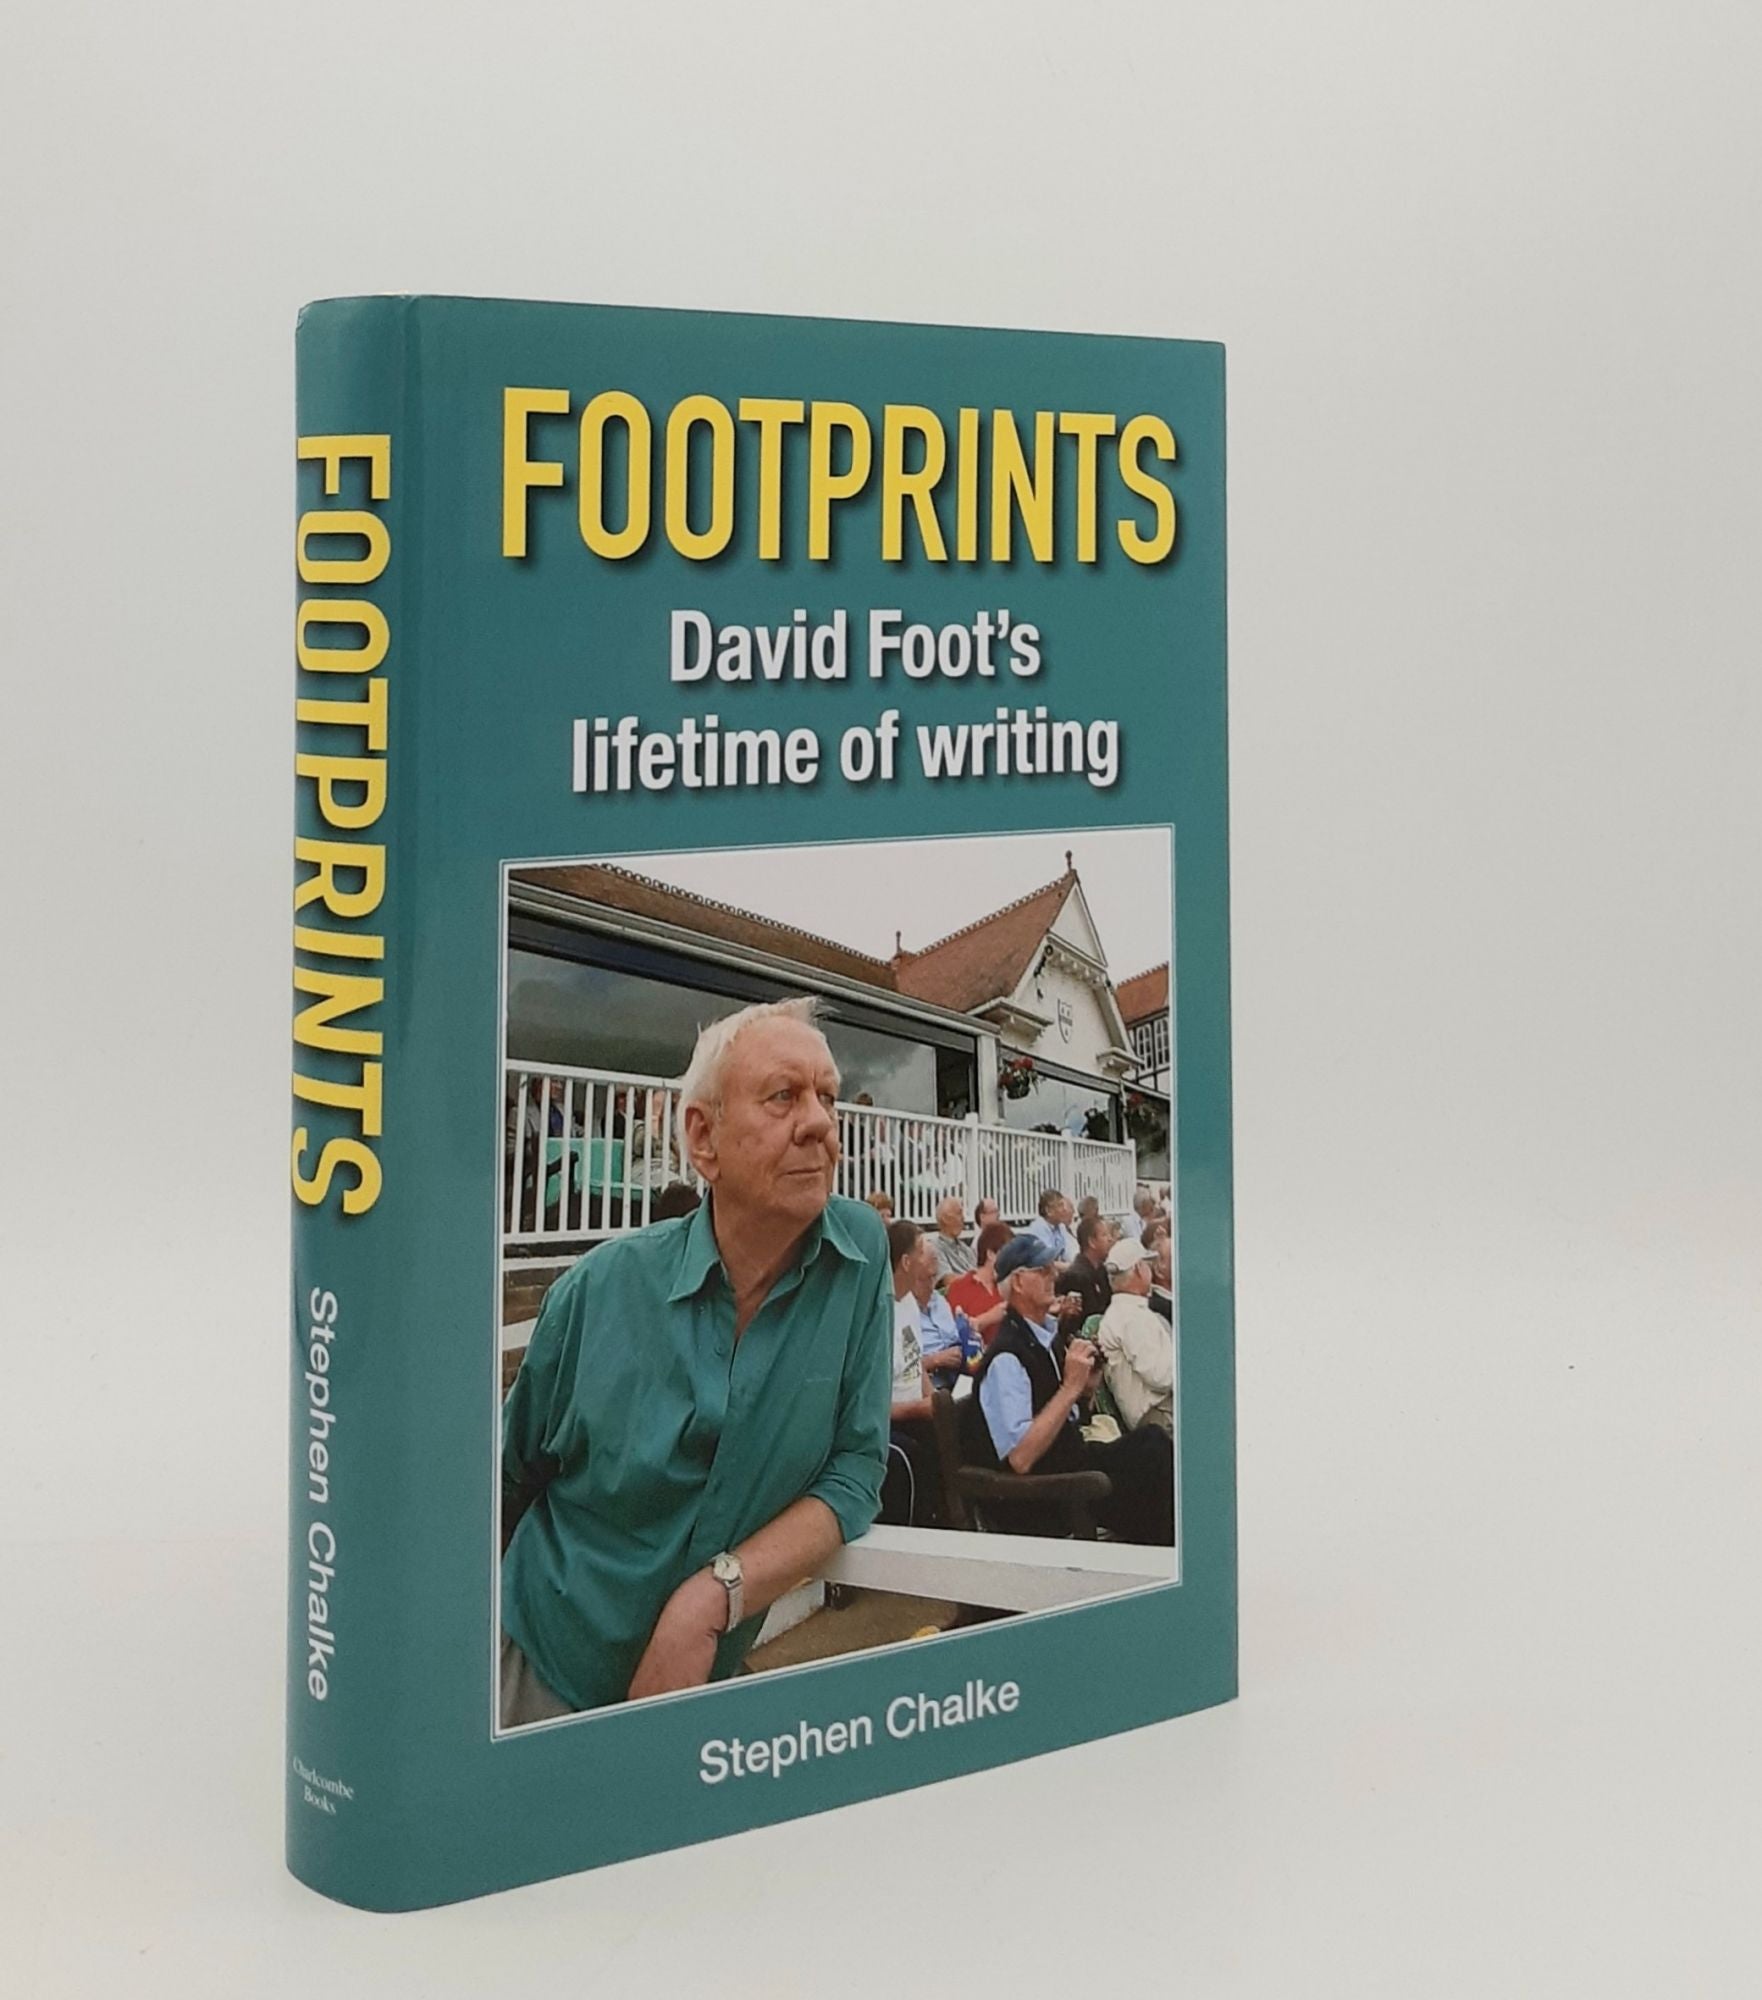 CHALKE Stephen - Footprints David Foot's Lifetime of Writing